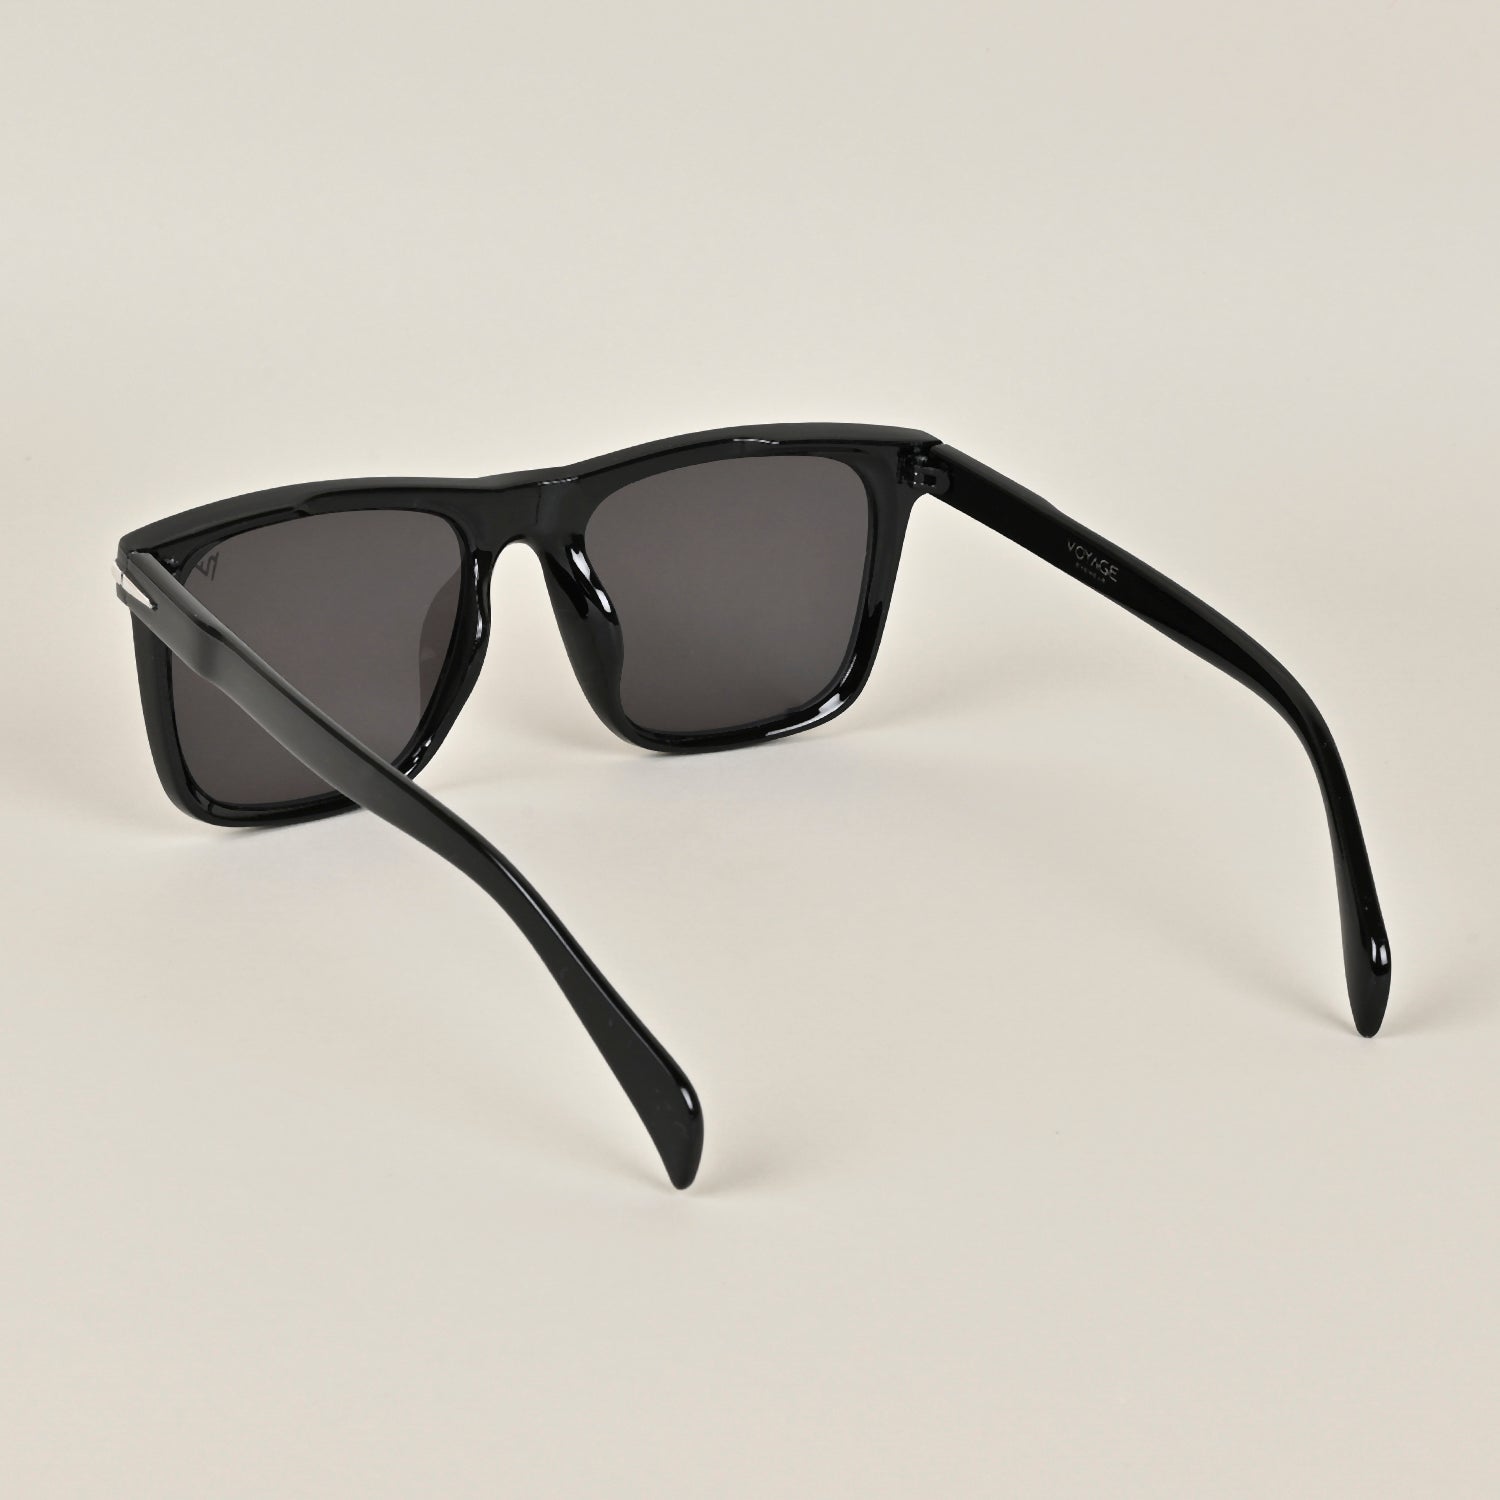 Voyage Black Wayfarer Sunglasses - MG3636